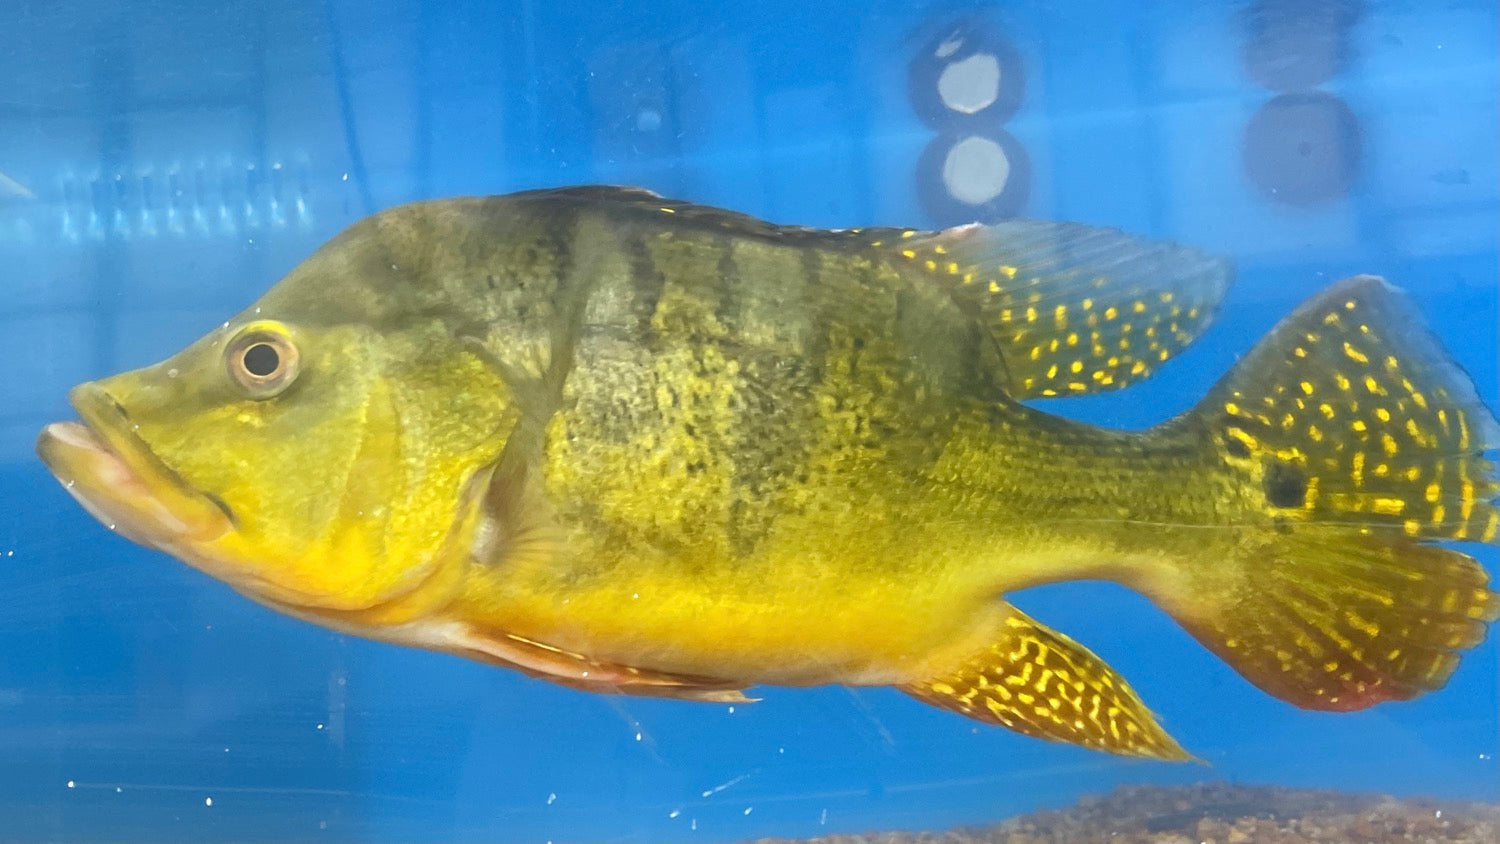 Short Body Kelberi Peacock Bass (Cichla kelberi)